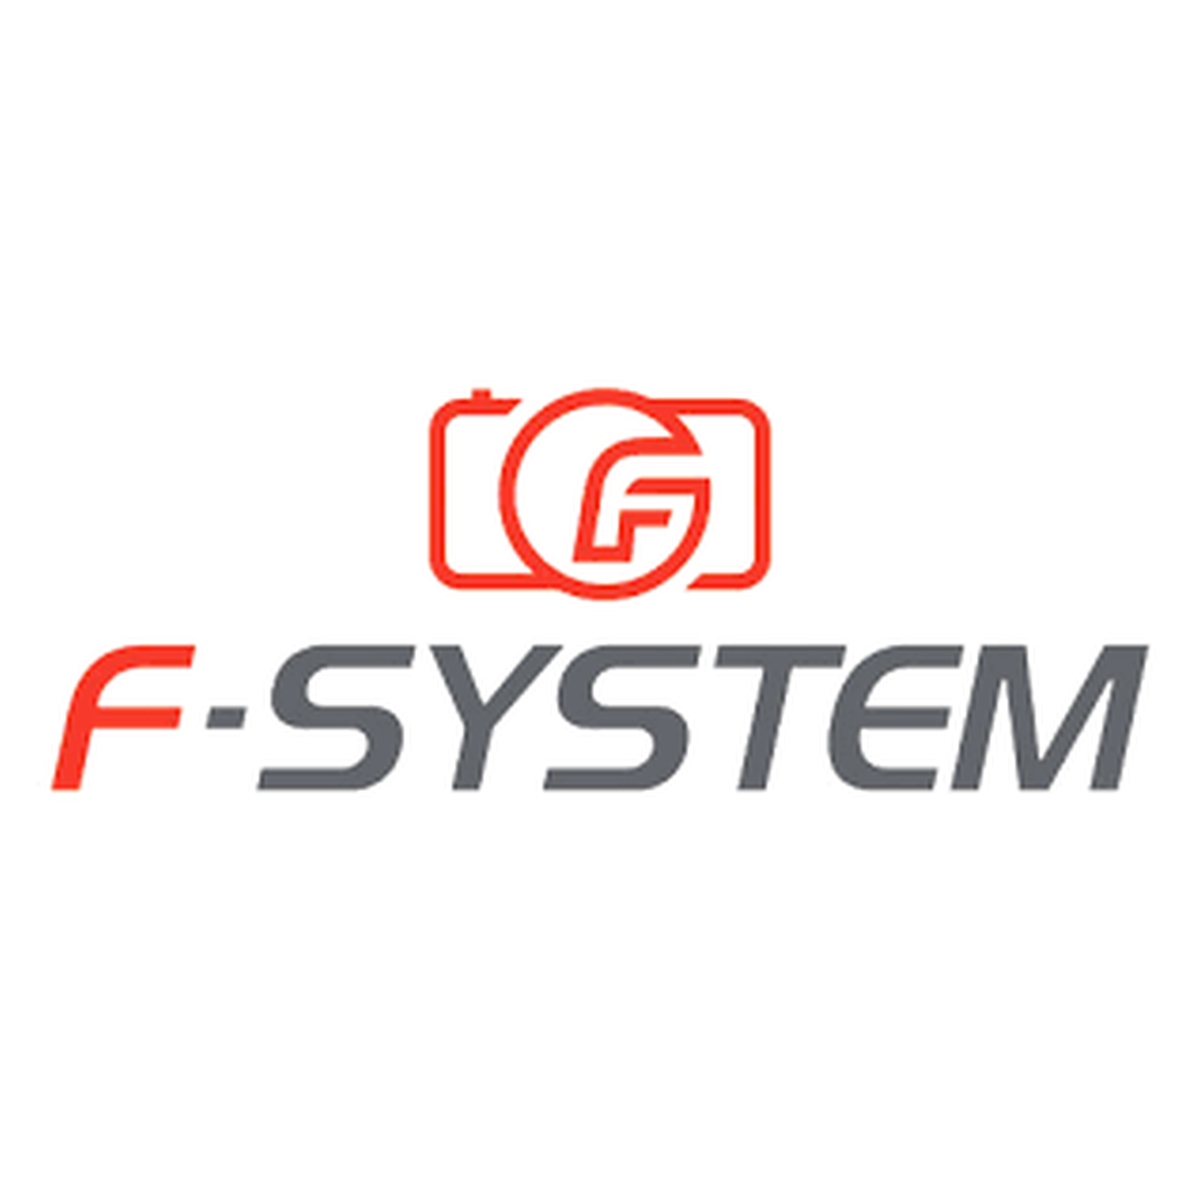 F-system